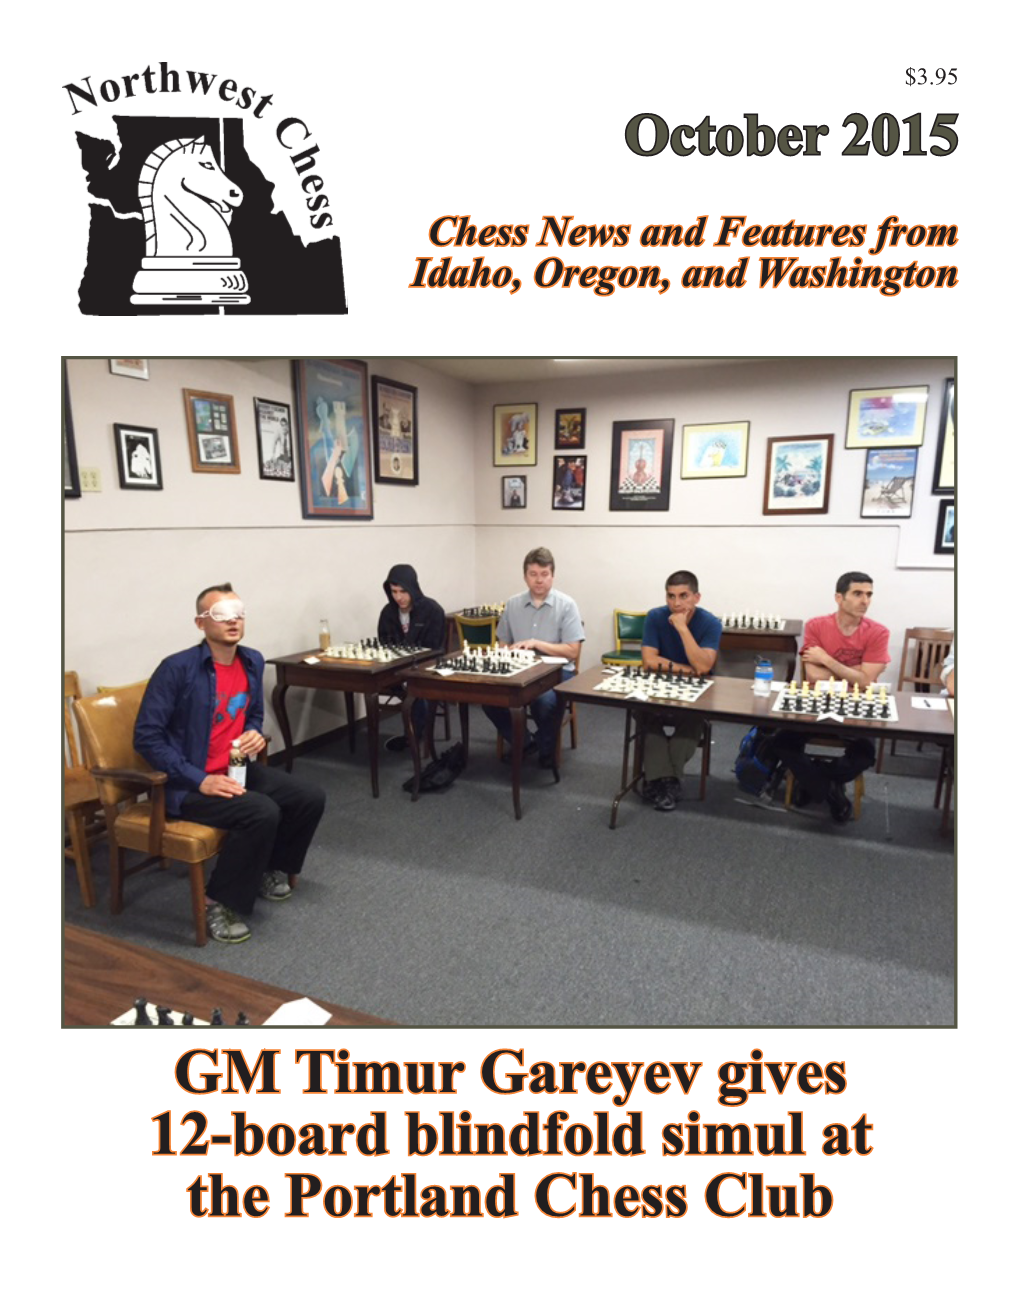 GM Timur Gareyev Gives 12-Board Blindfold Simul at the Portland Chess Club